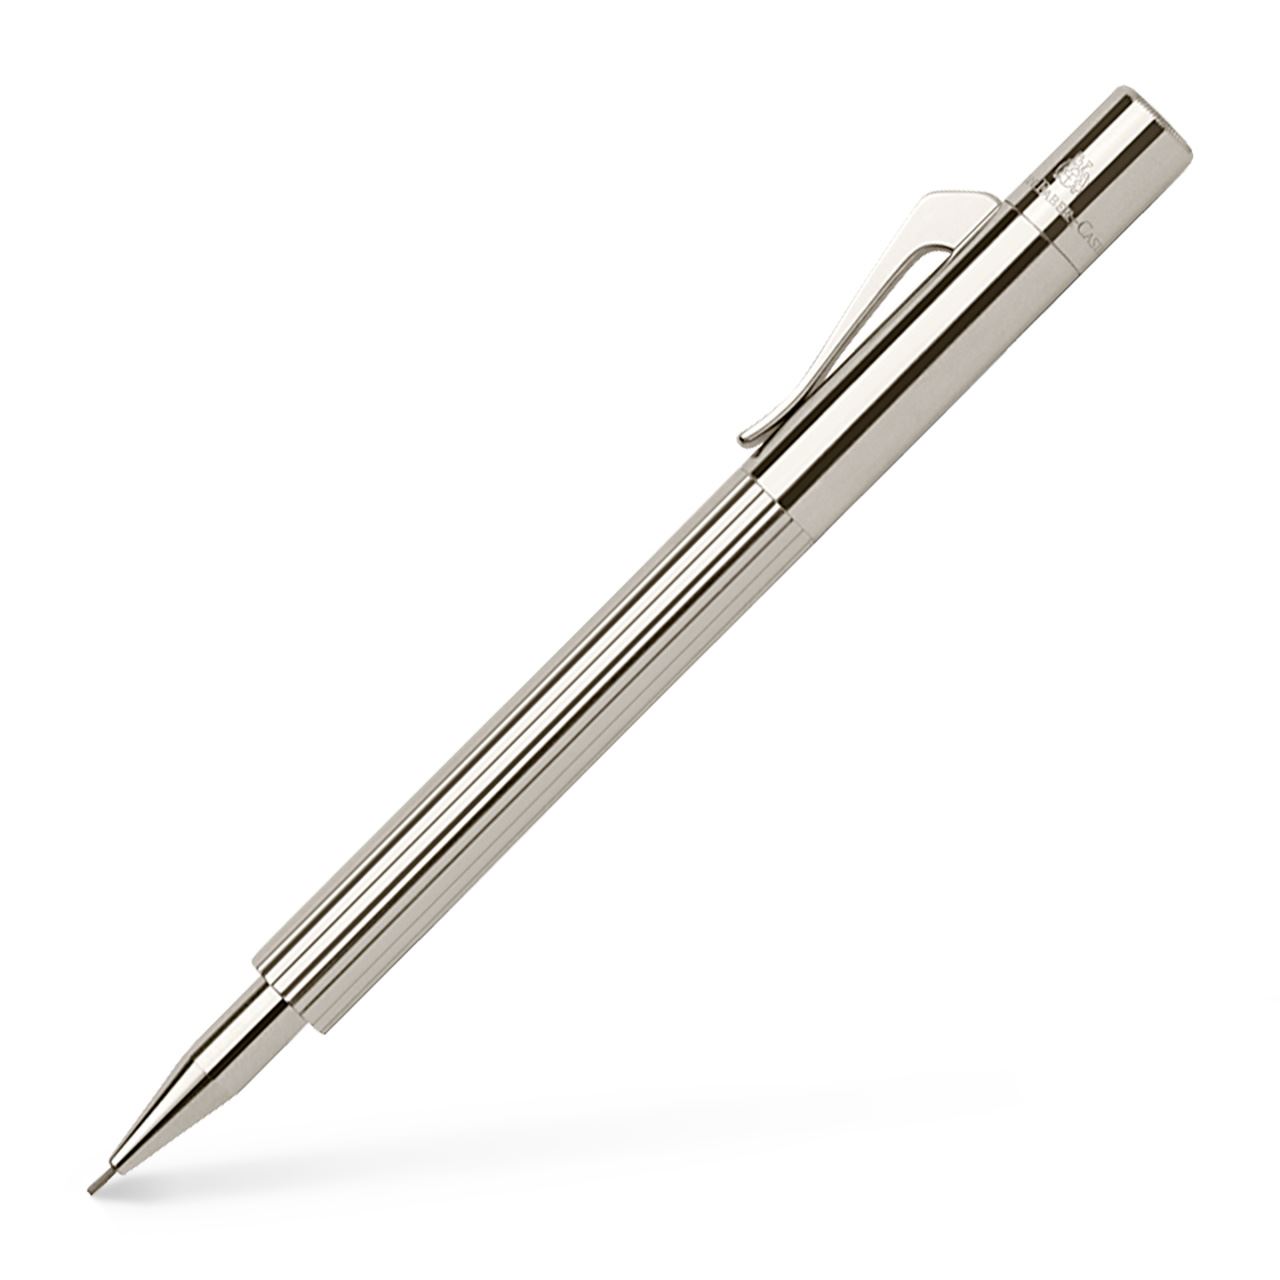 Graf-von-Faber-Castell - Platin kaplı mekanik cep kalemi